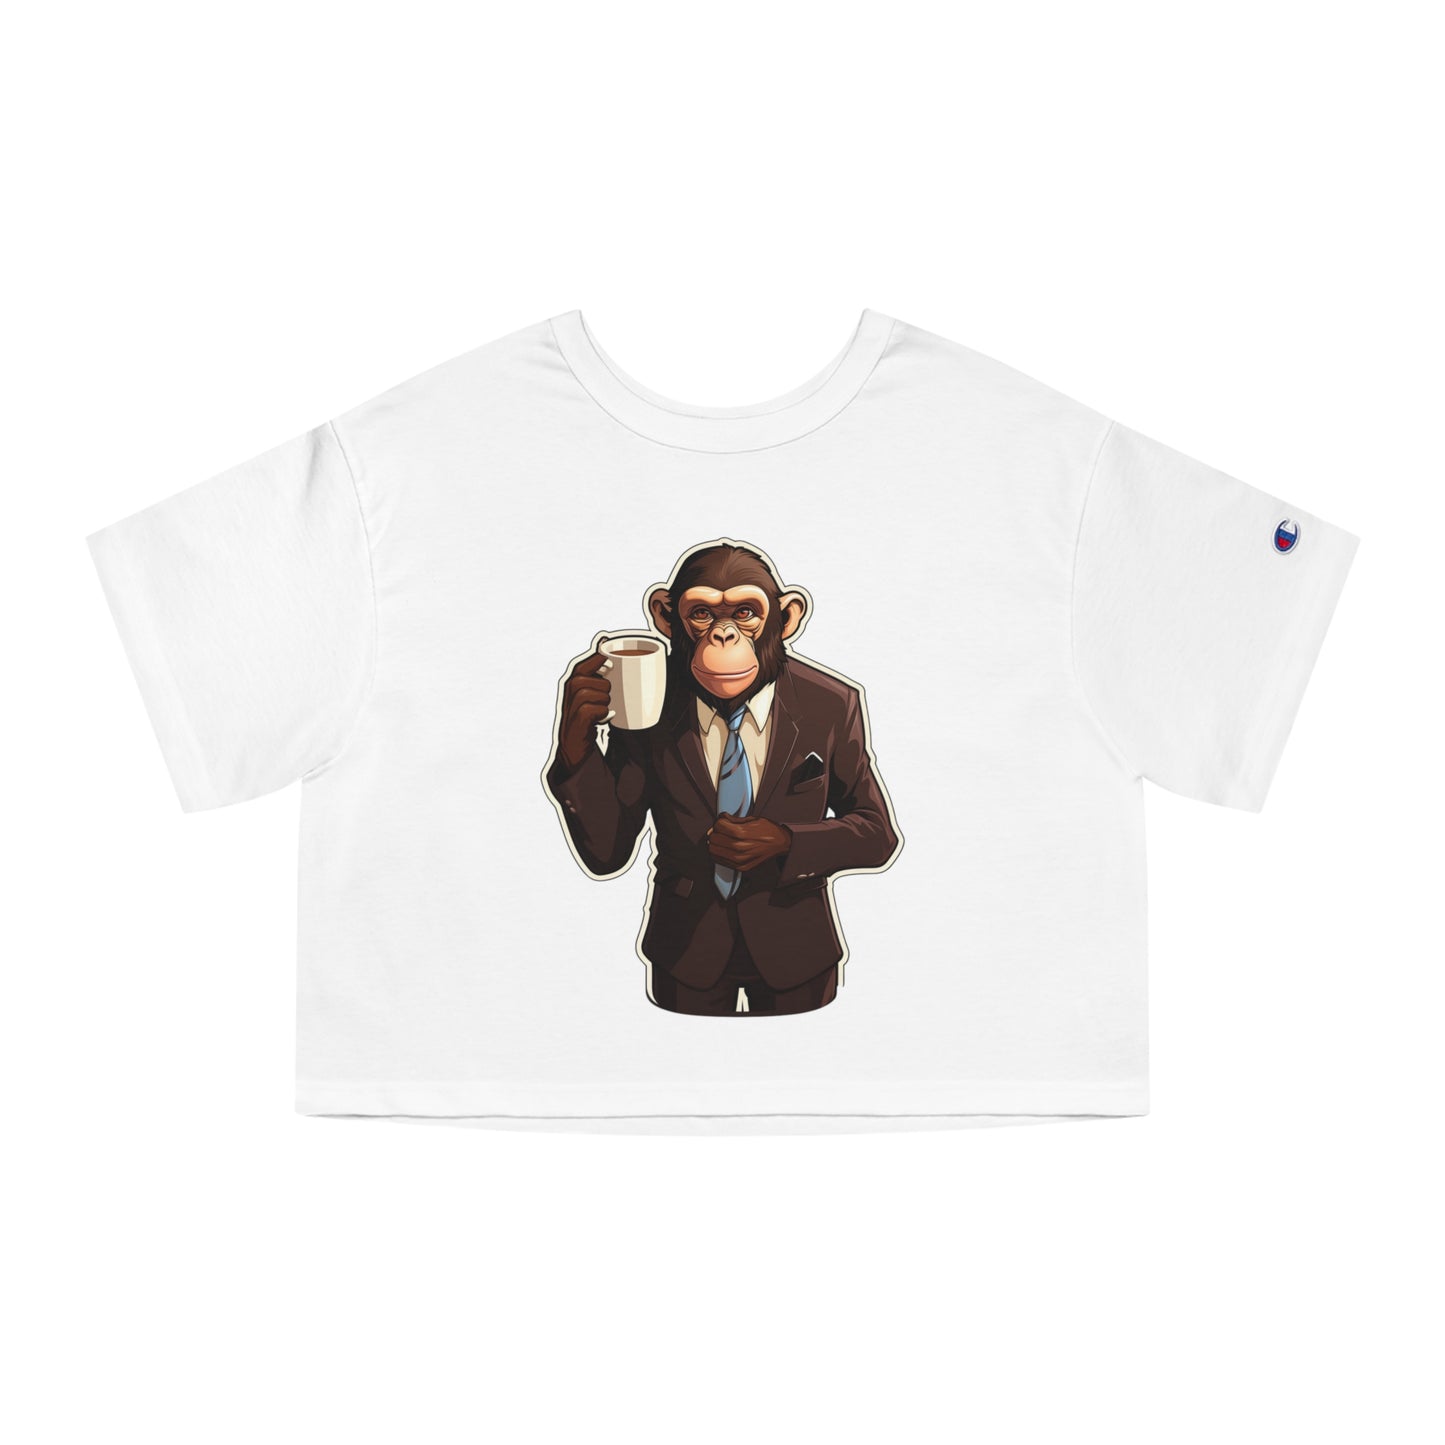 Monkey Business | Champion Women's Heritage Cropped T-Shirt